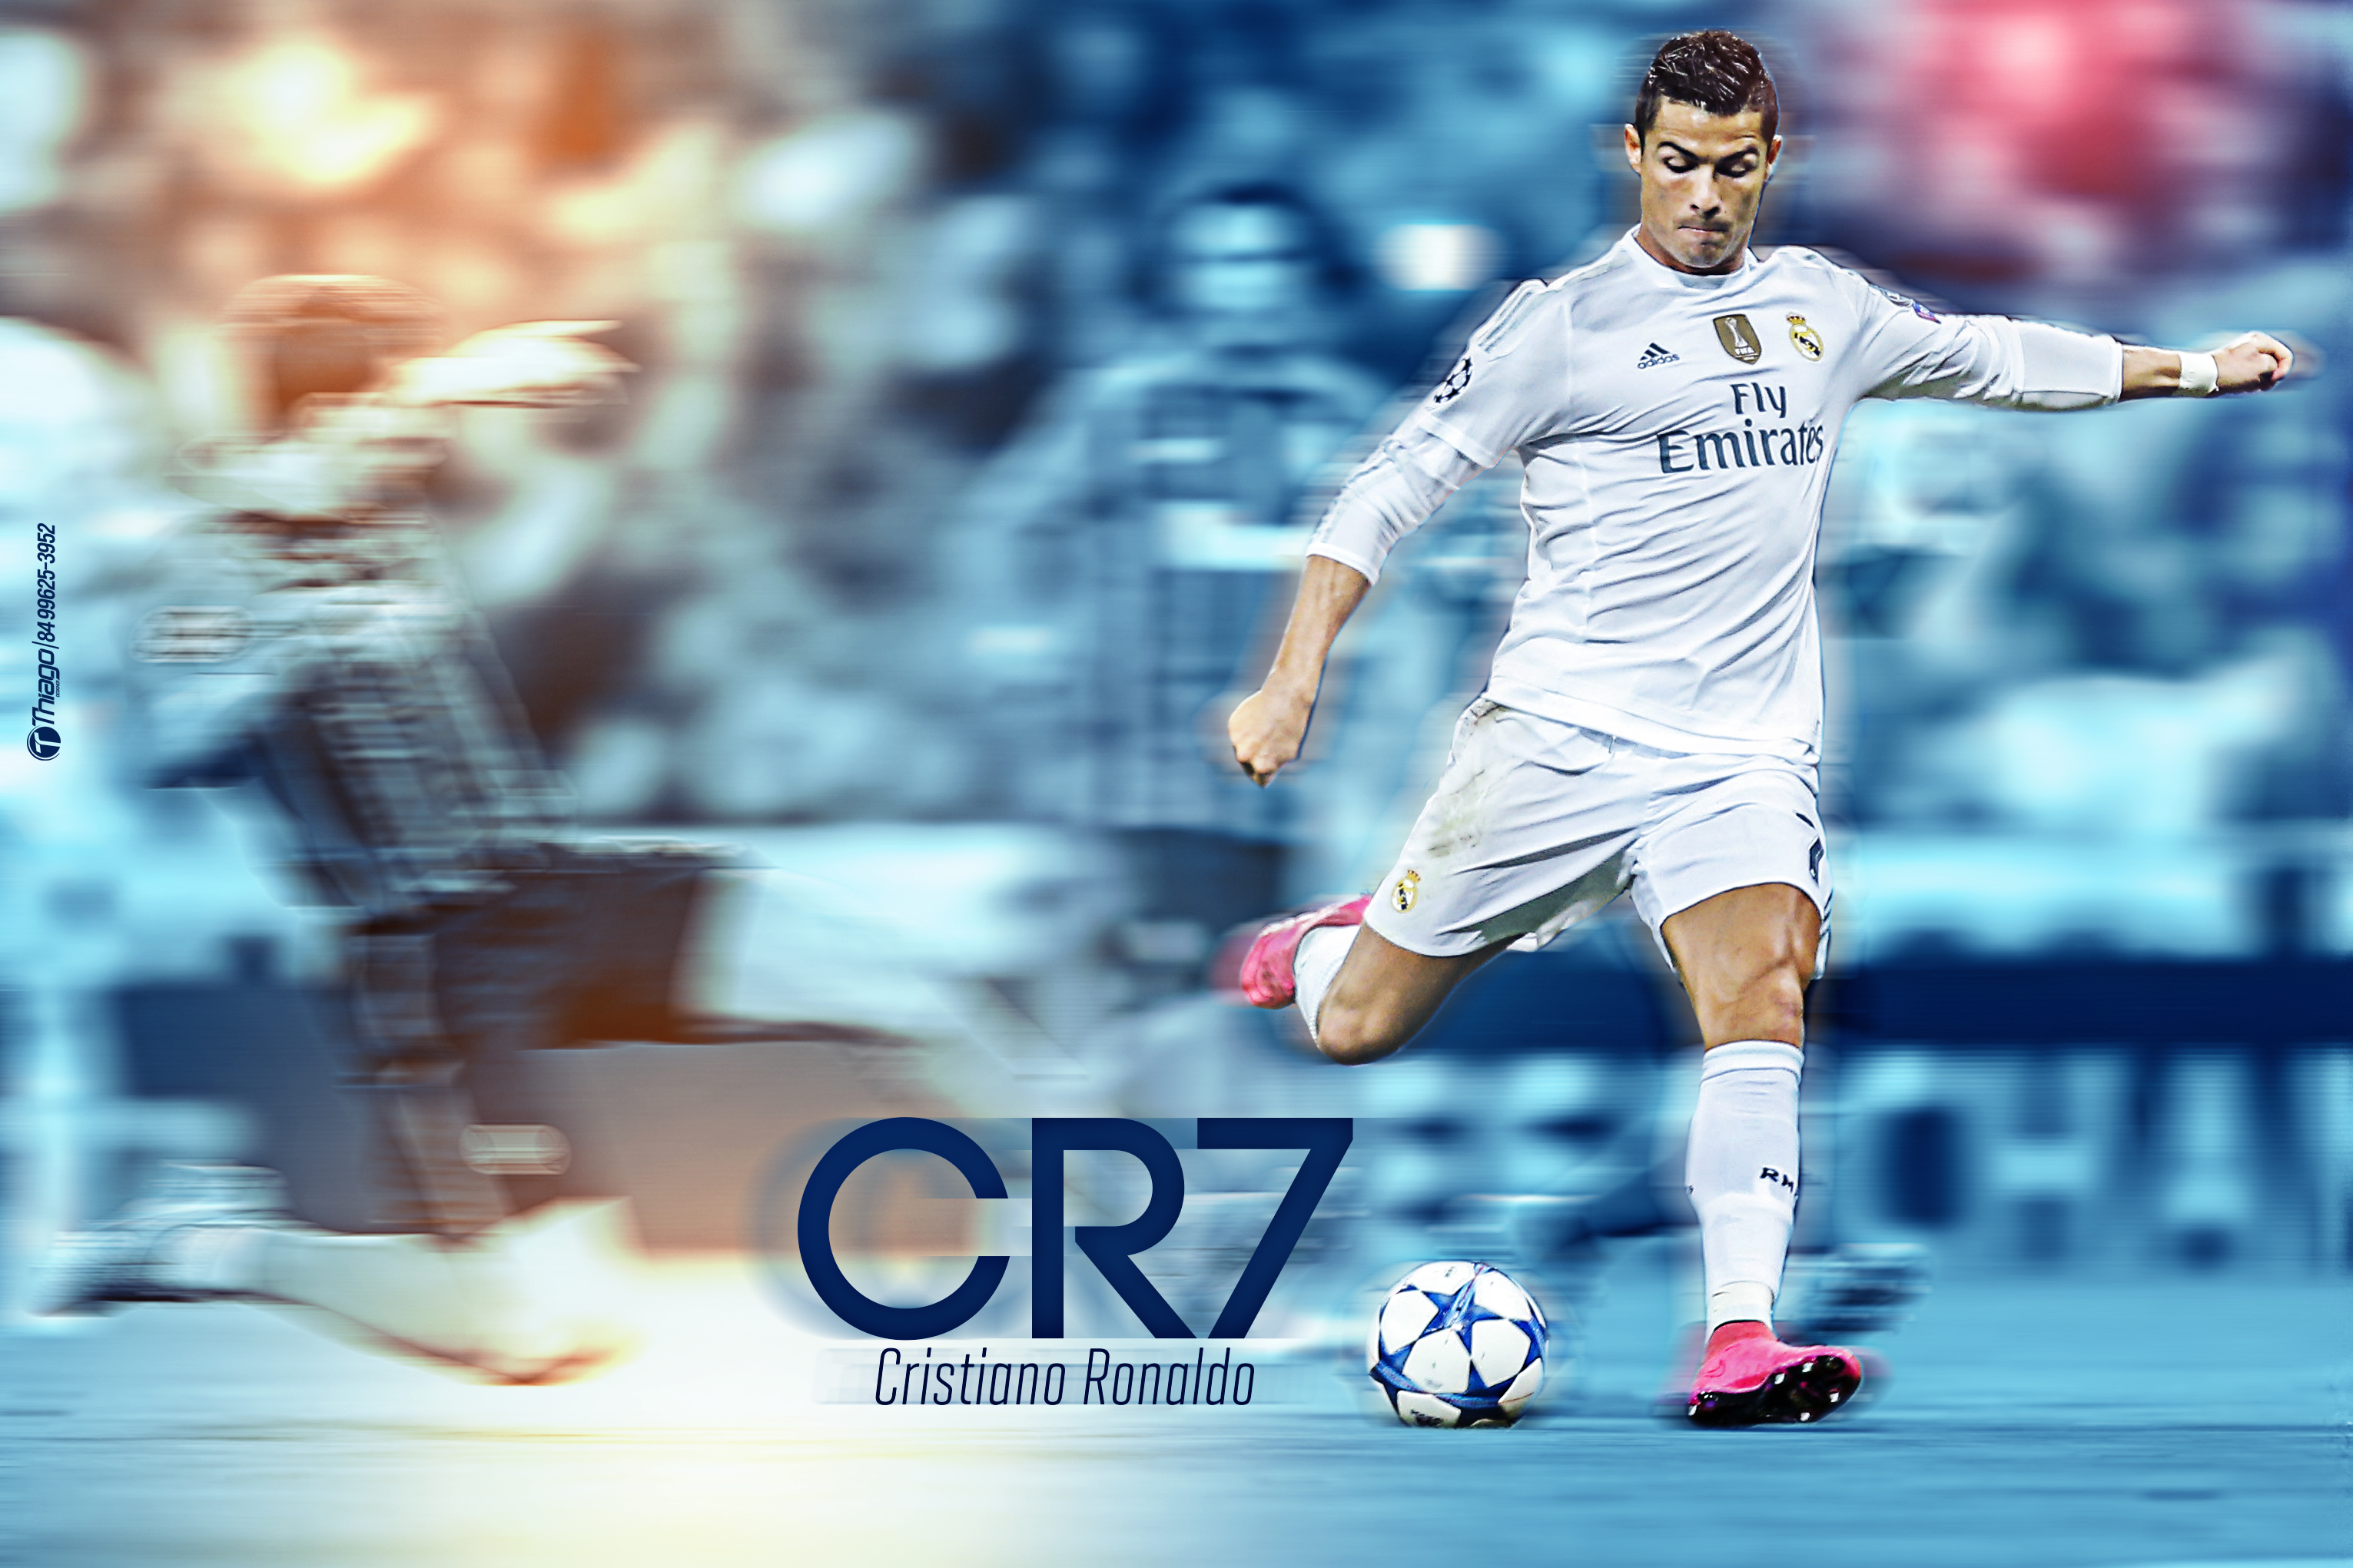 Wallpaper Cristiano Ronaldo Real Madrid by THIAGOJUSTINO on DeviantArt